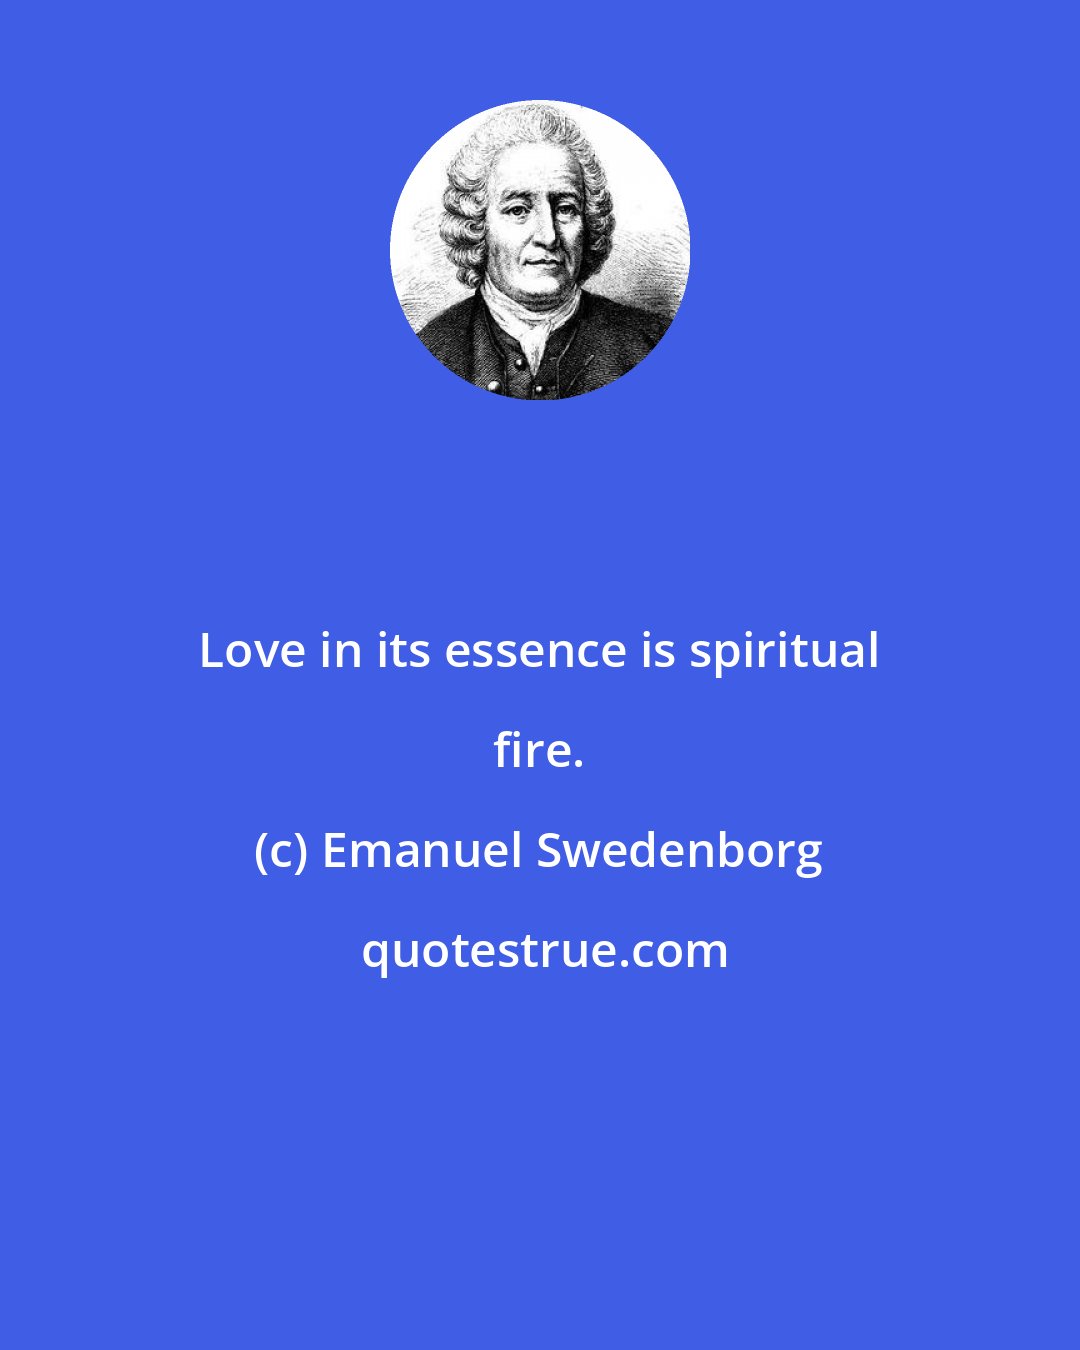 Emanuel Swedenborg: Love in its essence is spiritual fire.